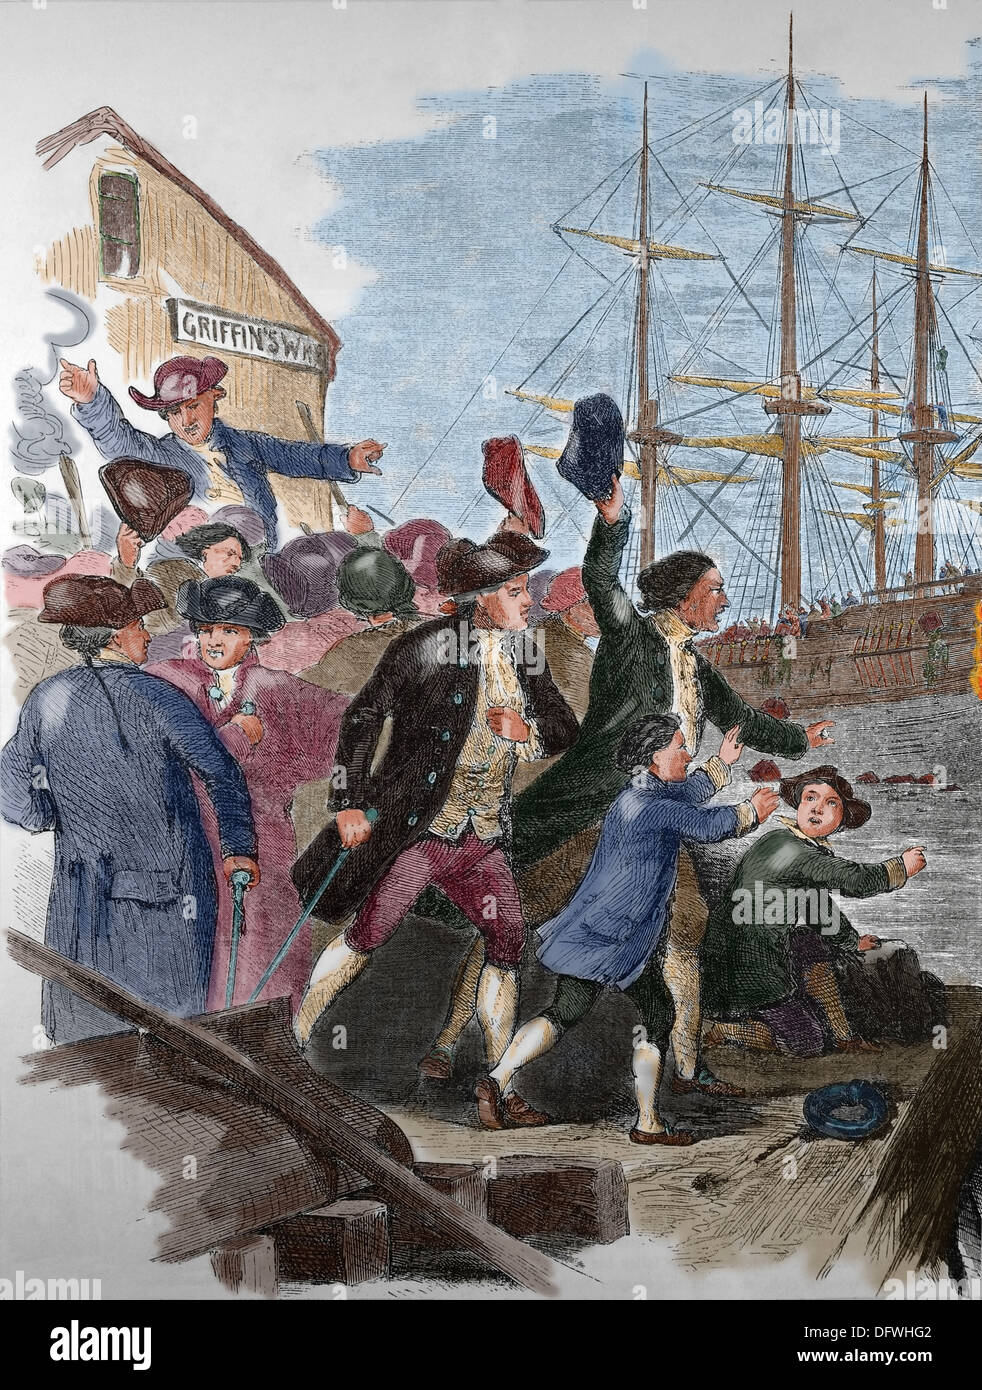 The Boston Tea Party. December 16, 1773. The destruction of Tea at Boston Harbor.Colored engraving. 19th century. Stock Photo